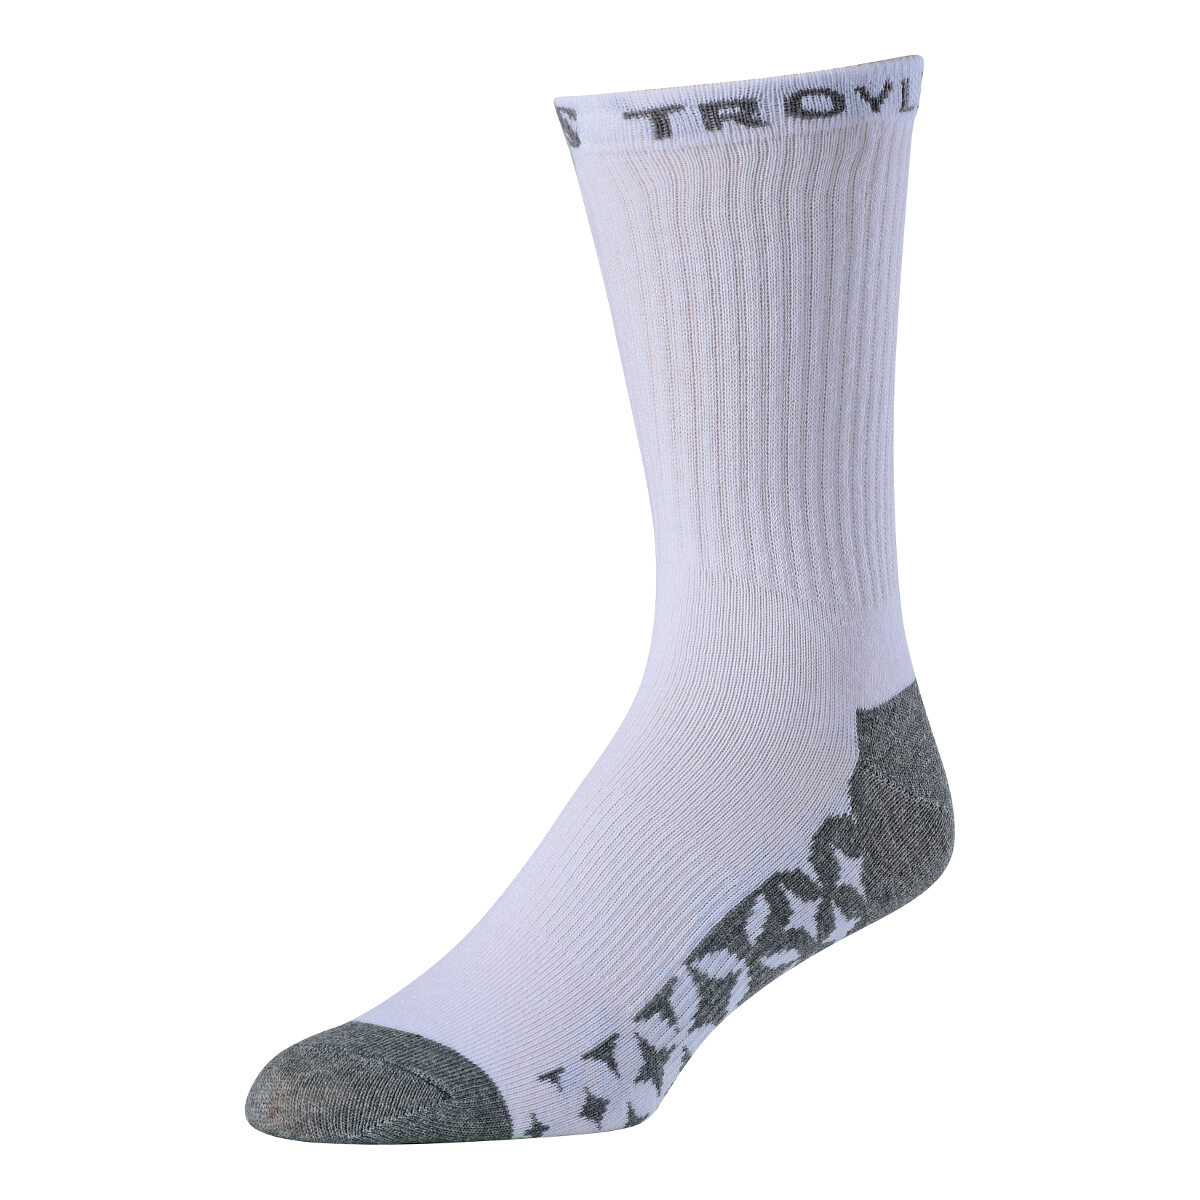 Troy Lee Designs Socks Starburst Crew White, 3 Pack